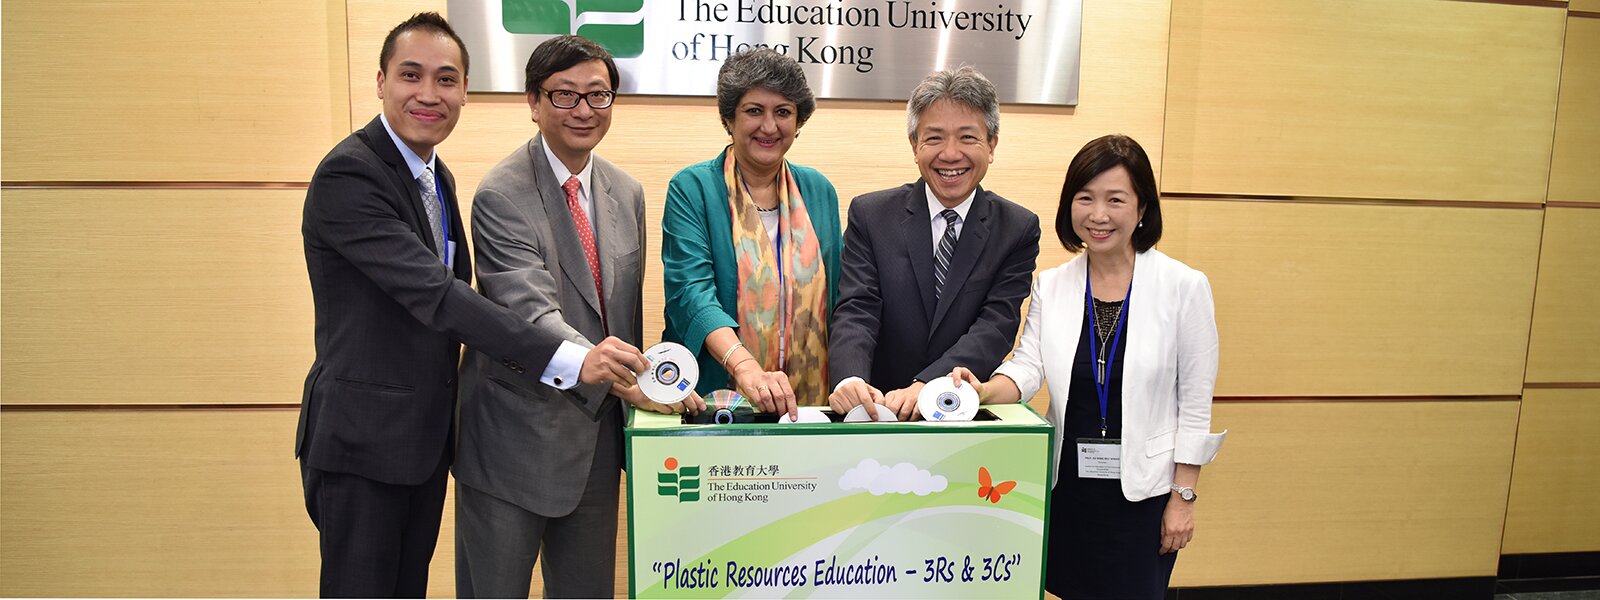 Plastic Resources Education – 3Rs & 3Cs Programme  Launch Ceremony